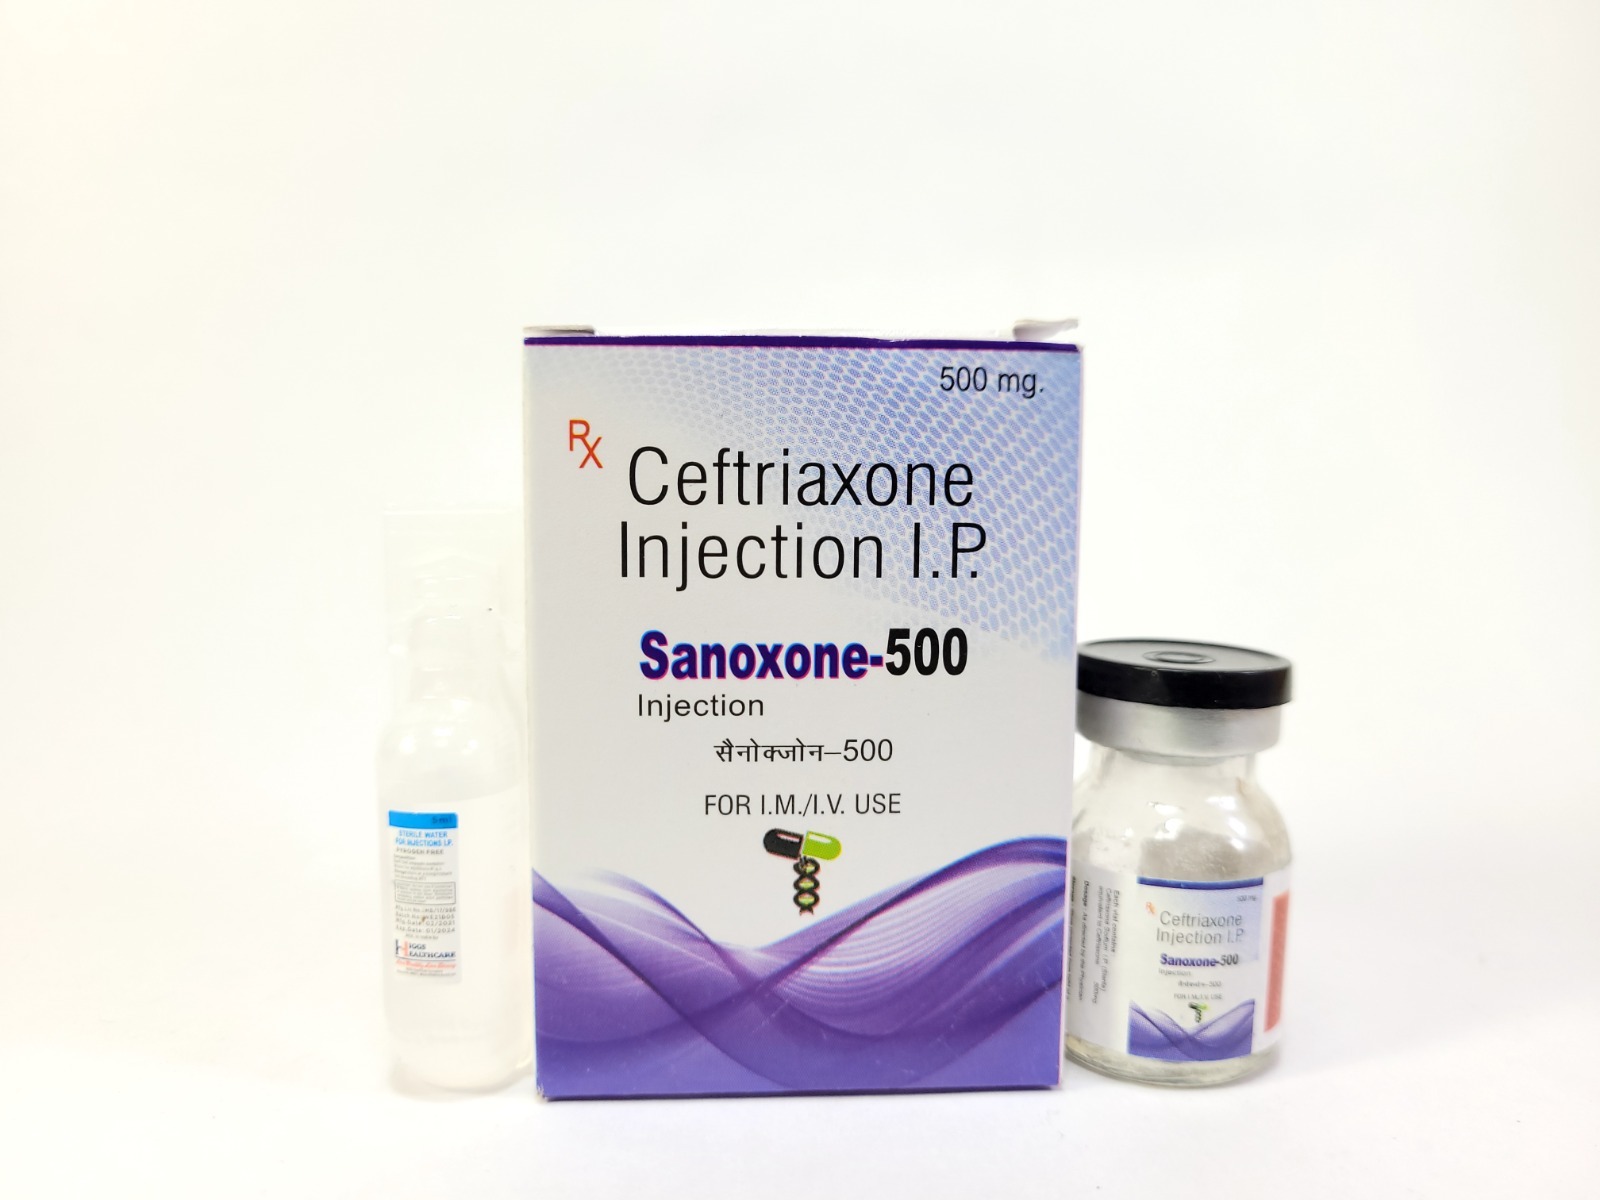 Sanoxone-500 Injection